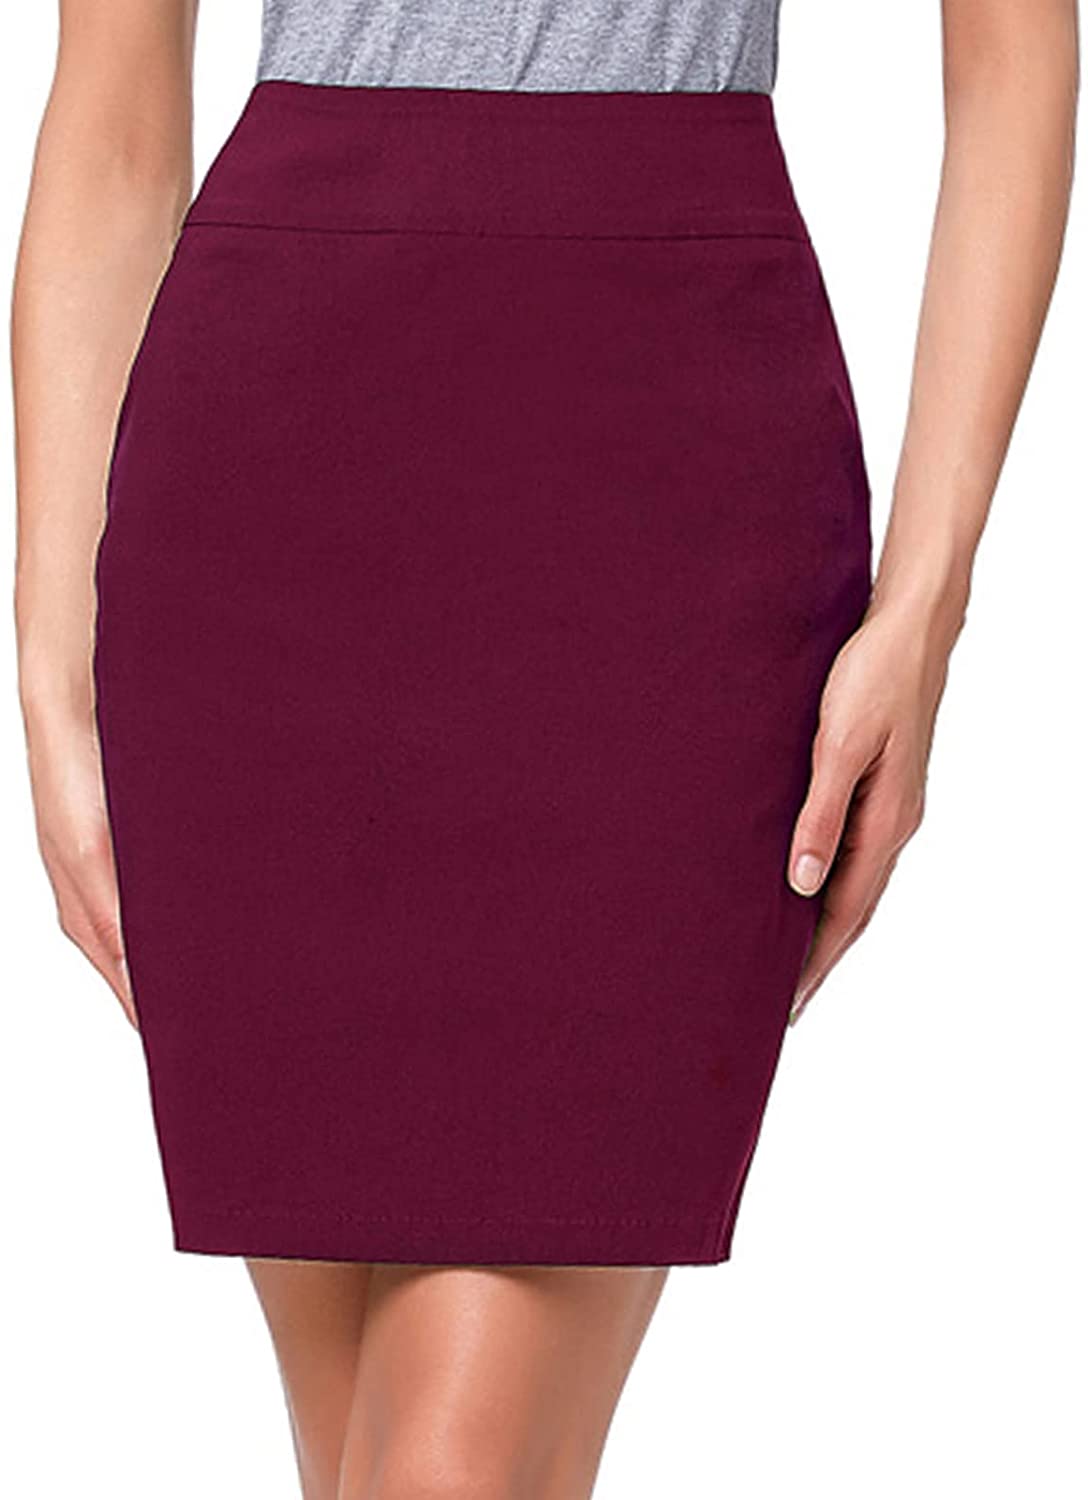 Kate Kasin Women's Knee Length Pencil Skirts Slim Fit Business Skirt 